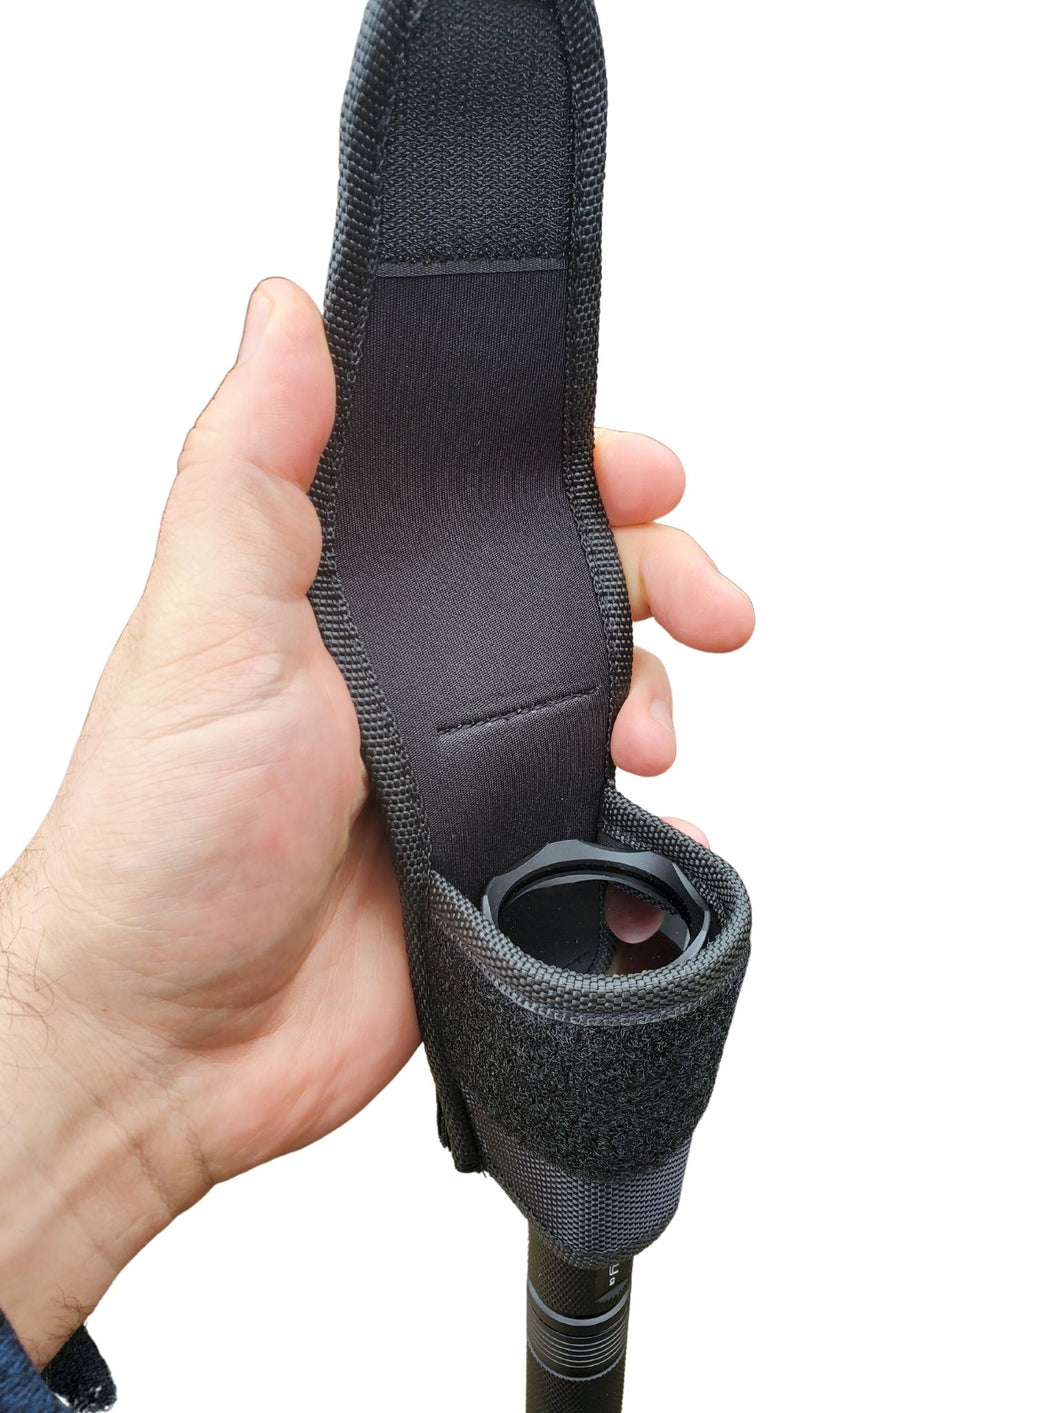 Convoy C8 Flashlight Holder / Belt Holster - Hands free carrying of your UV flashlight